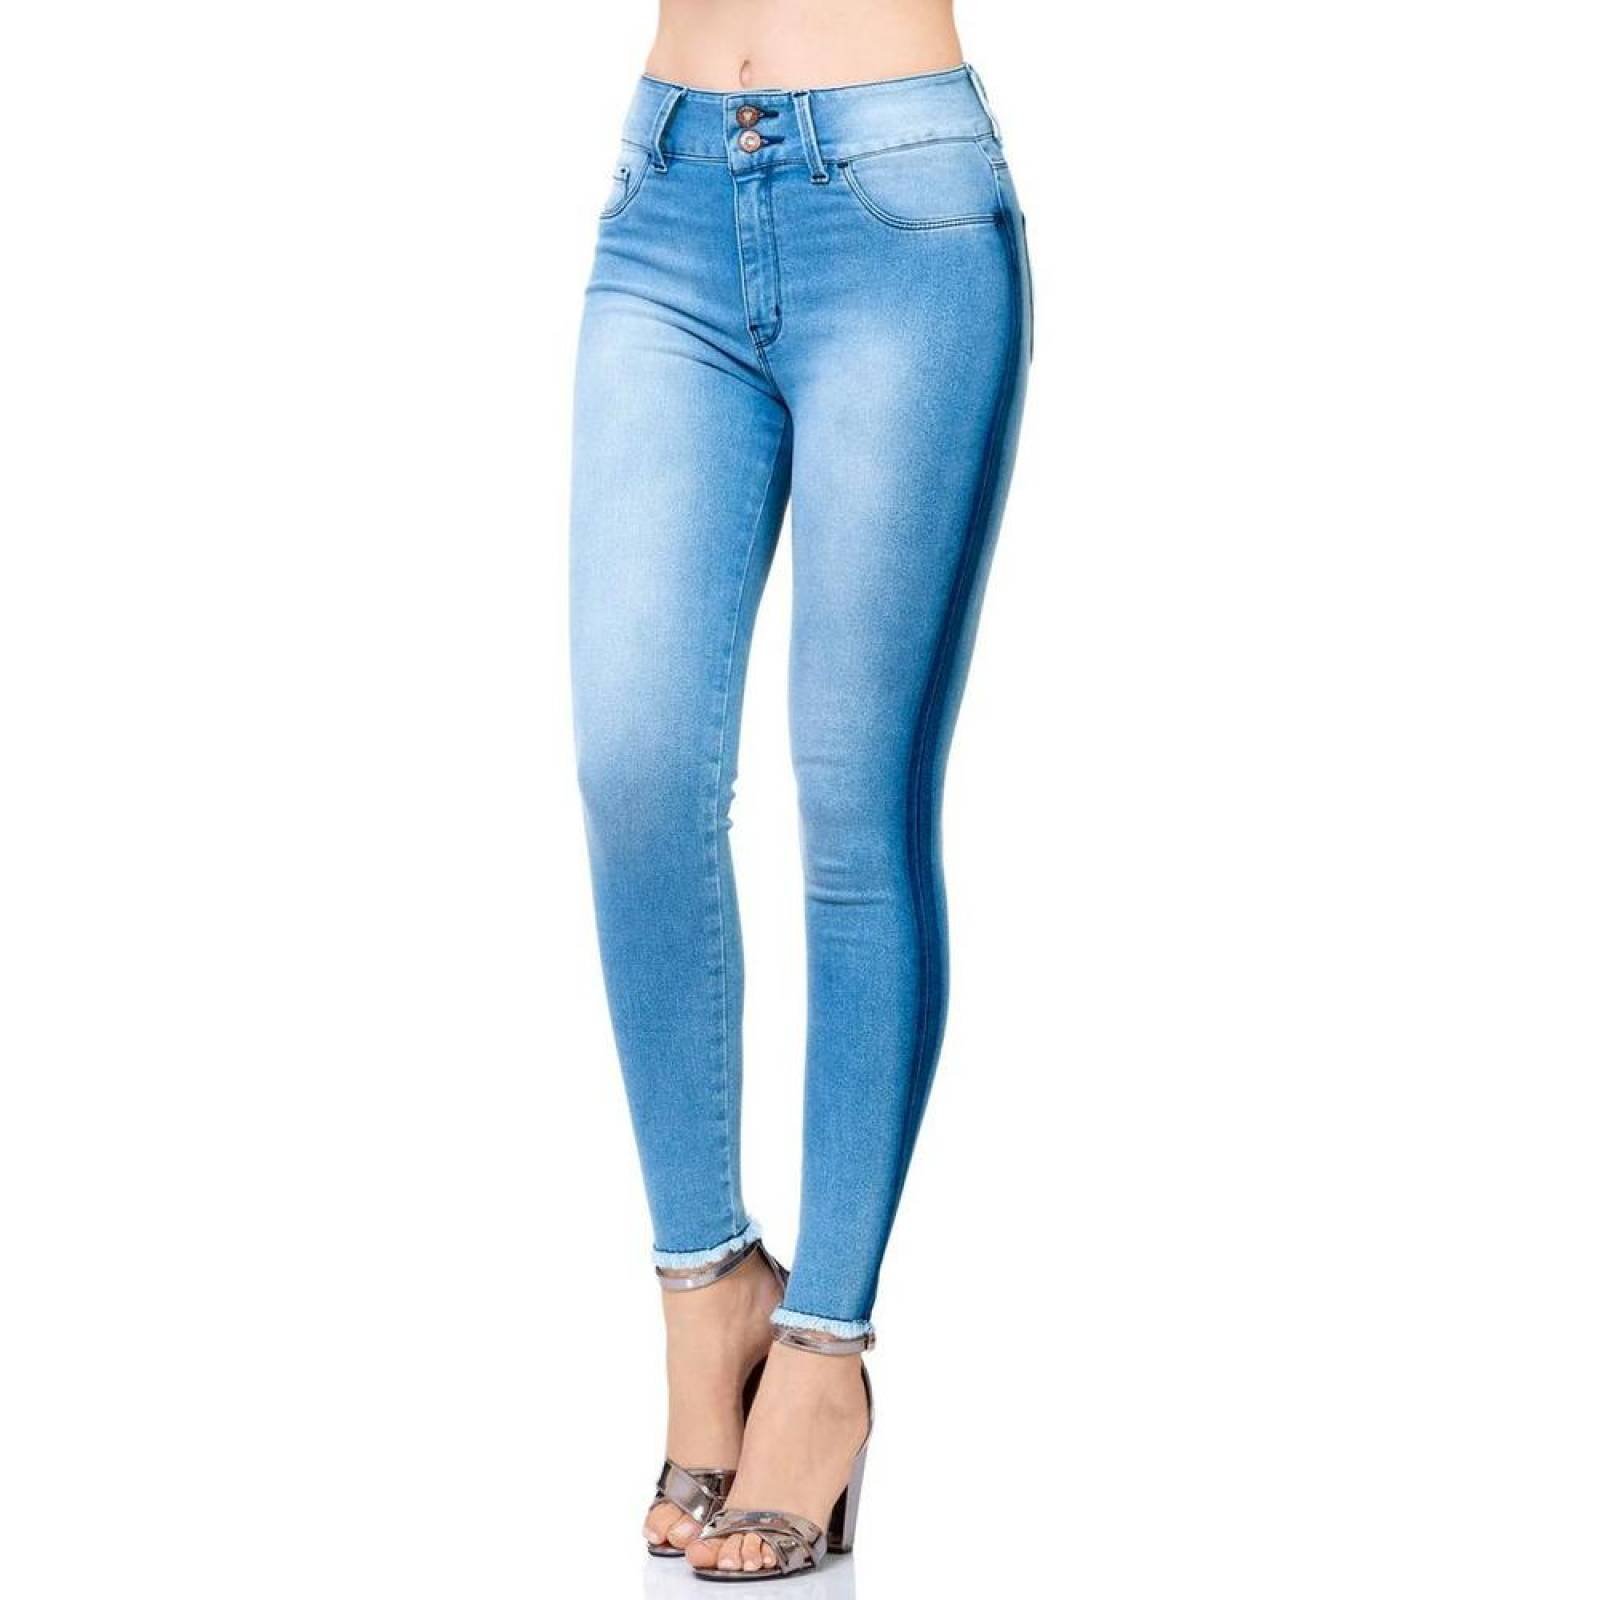 Jeans Oggi Jeans Mujer Azul Mezclilla Stretch Katia 